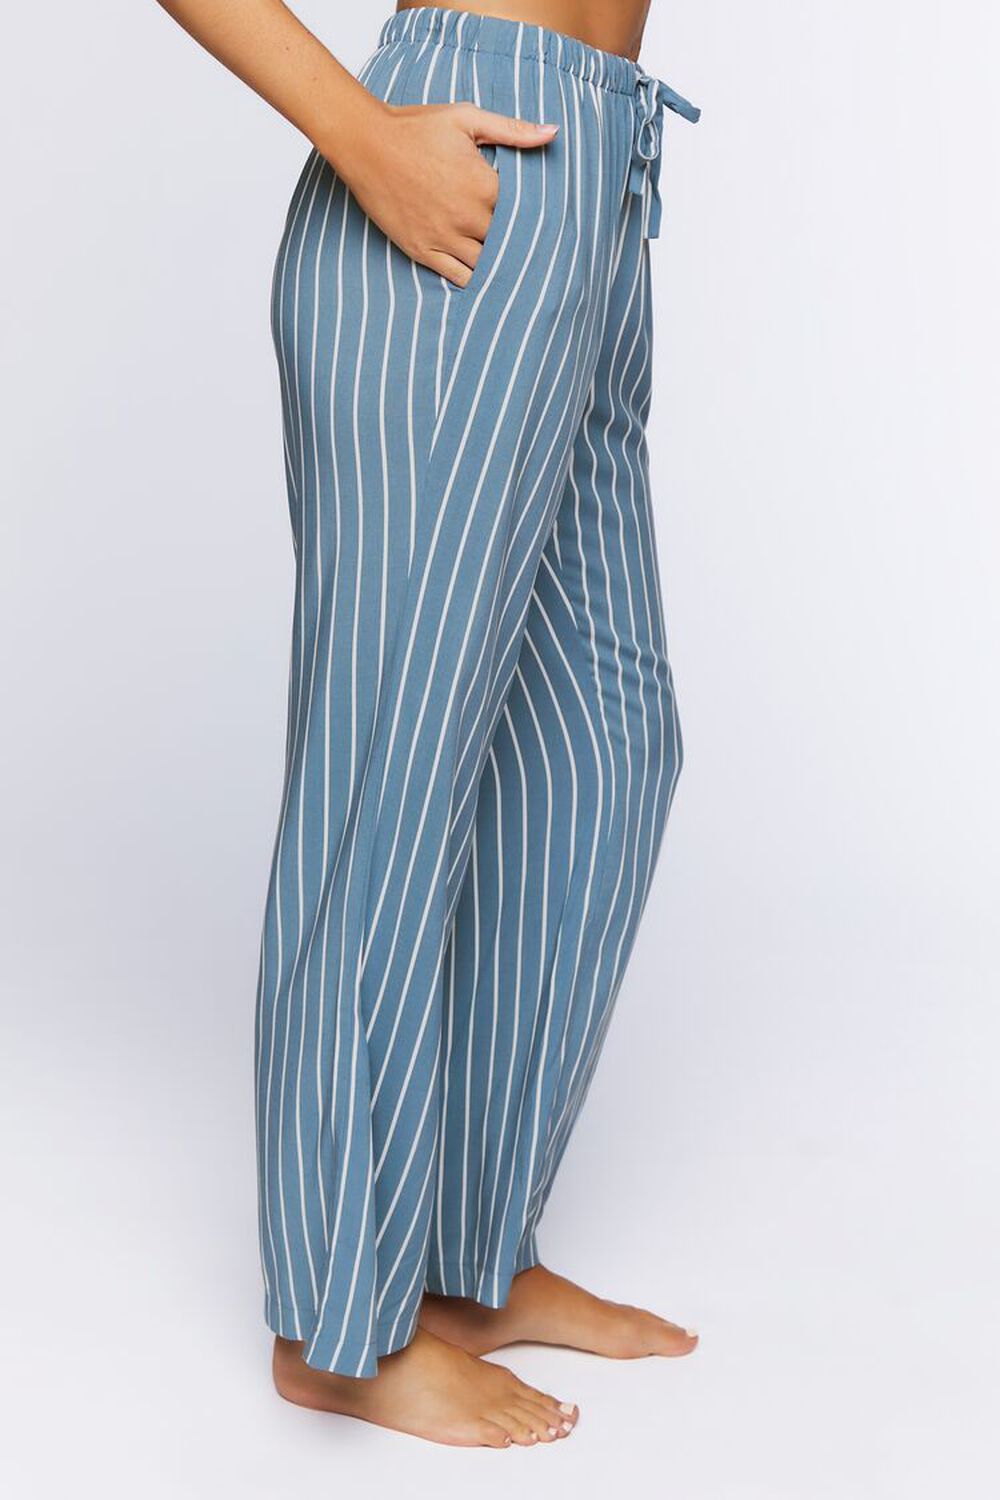 COLONY BLUE/WHITE Striped Pajama Pants, image 3